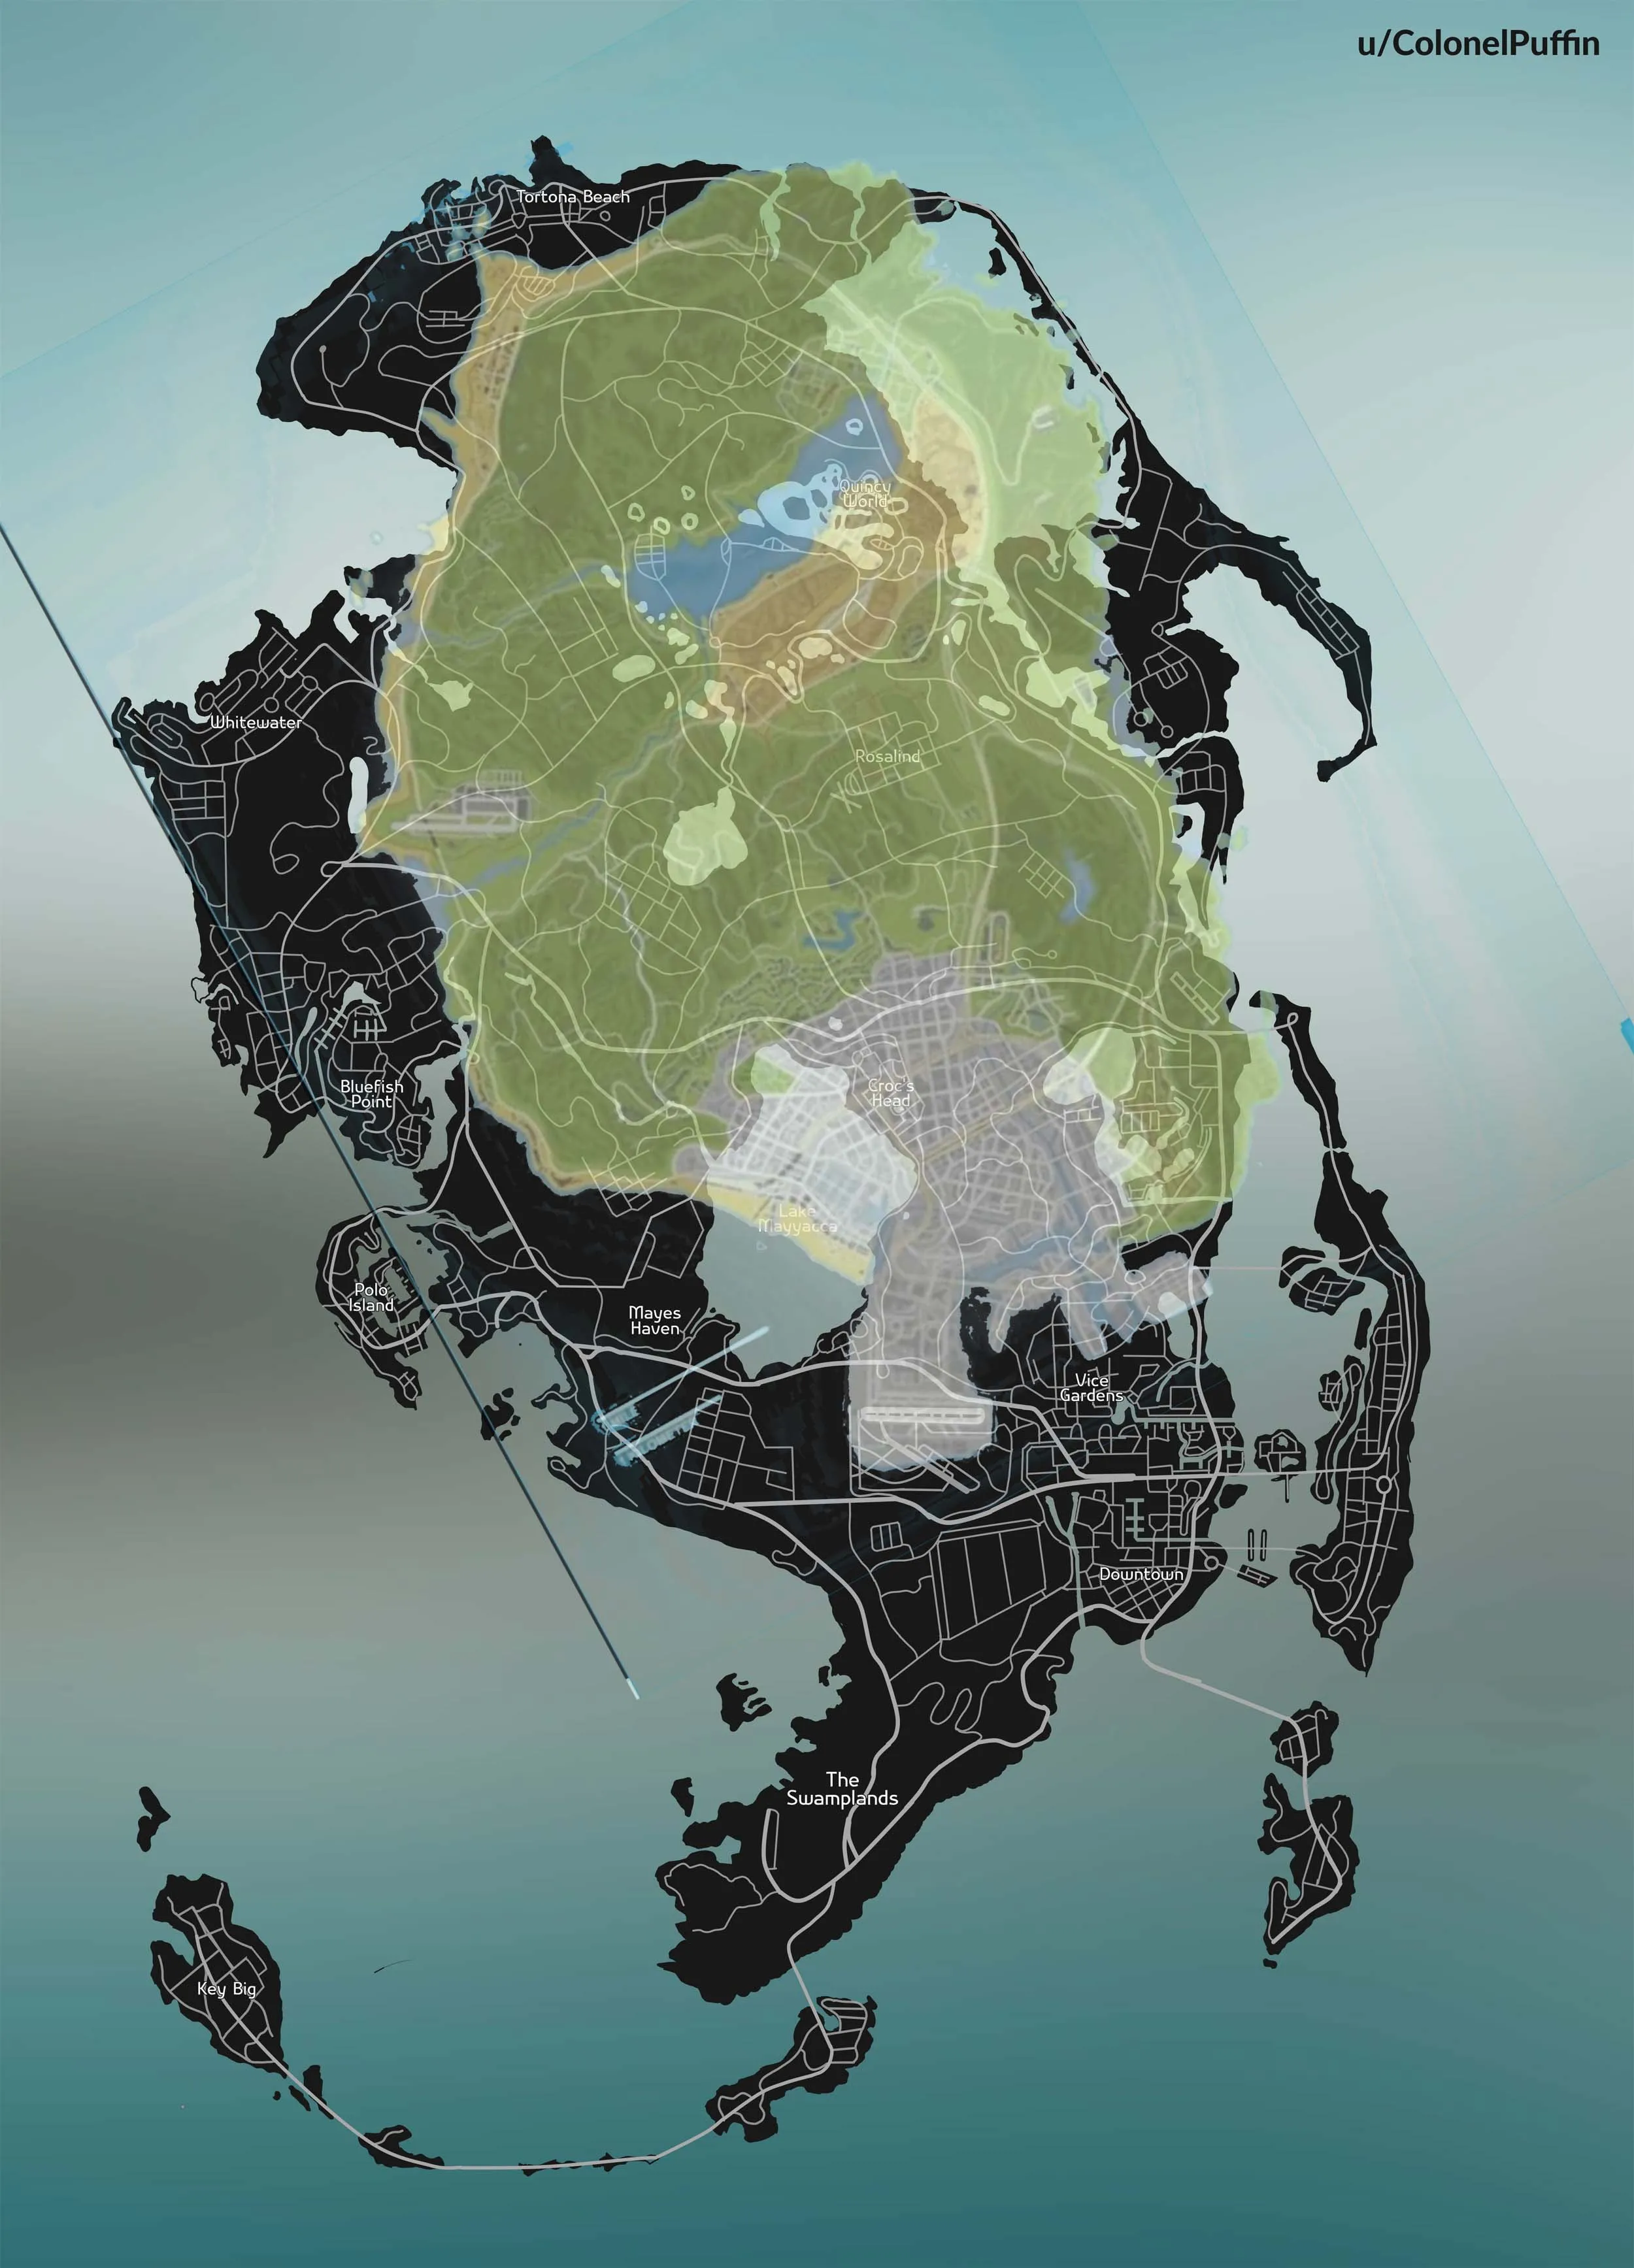 gta 6 map leak - vice city 2021 leaked map hd gta 5 comparison